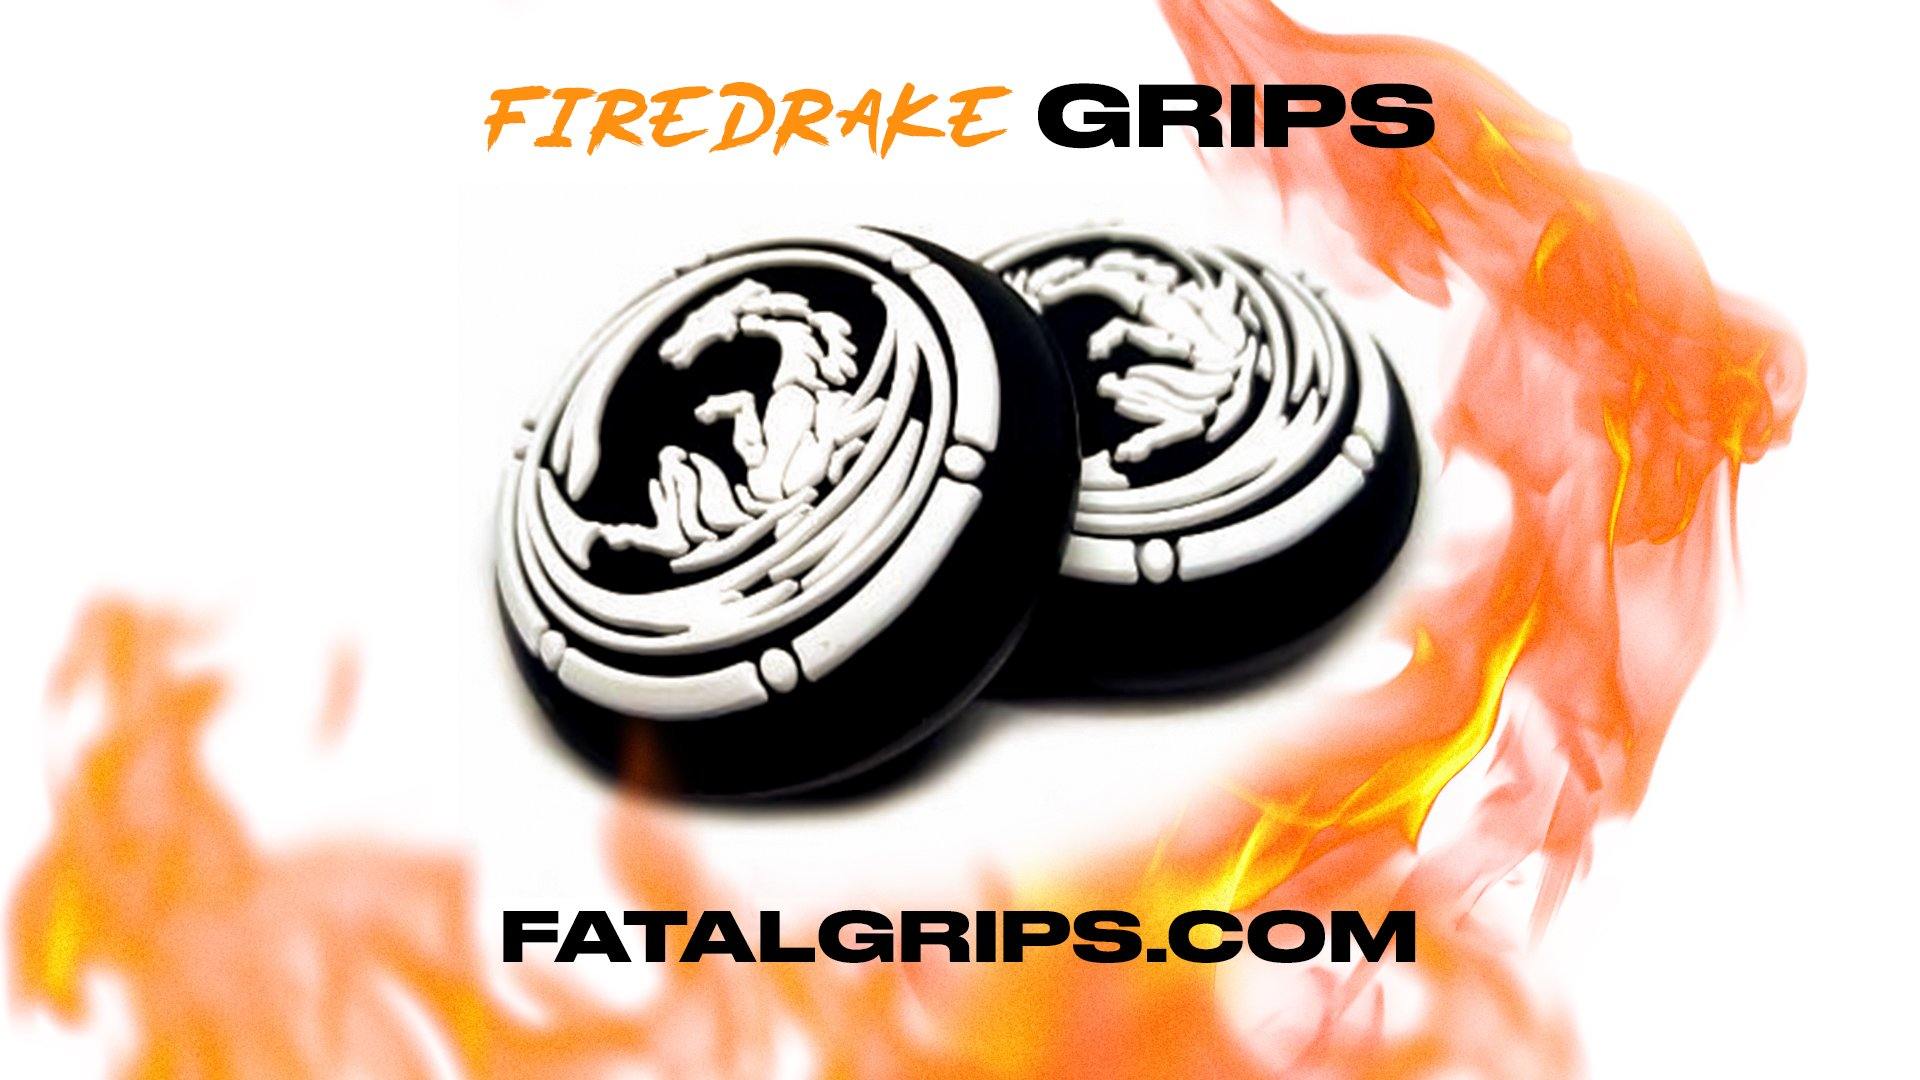 Firedrake Grips - Fatal Grips